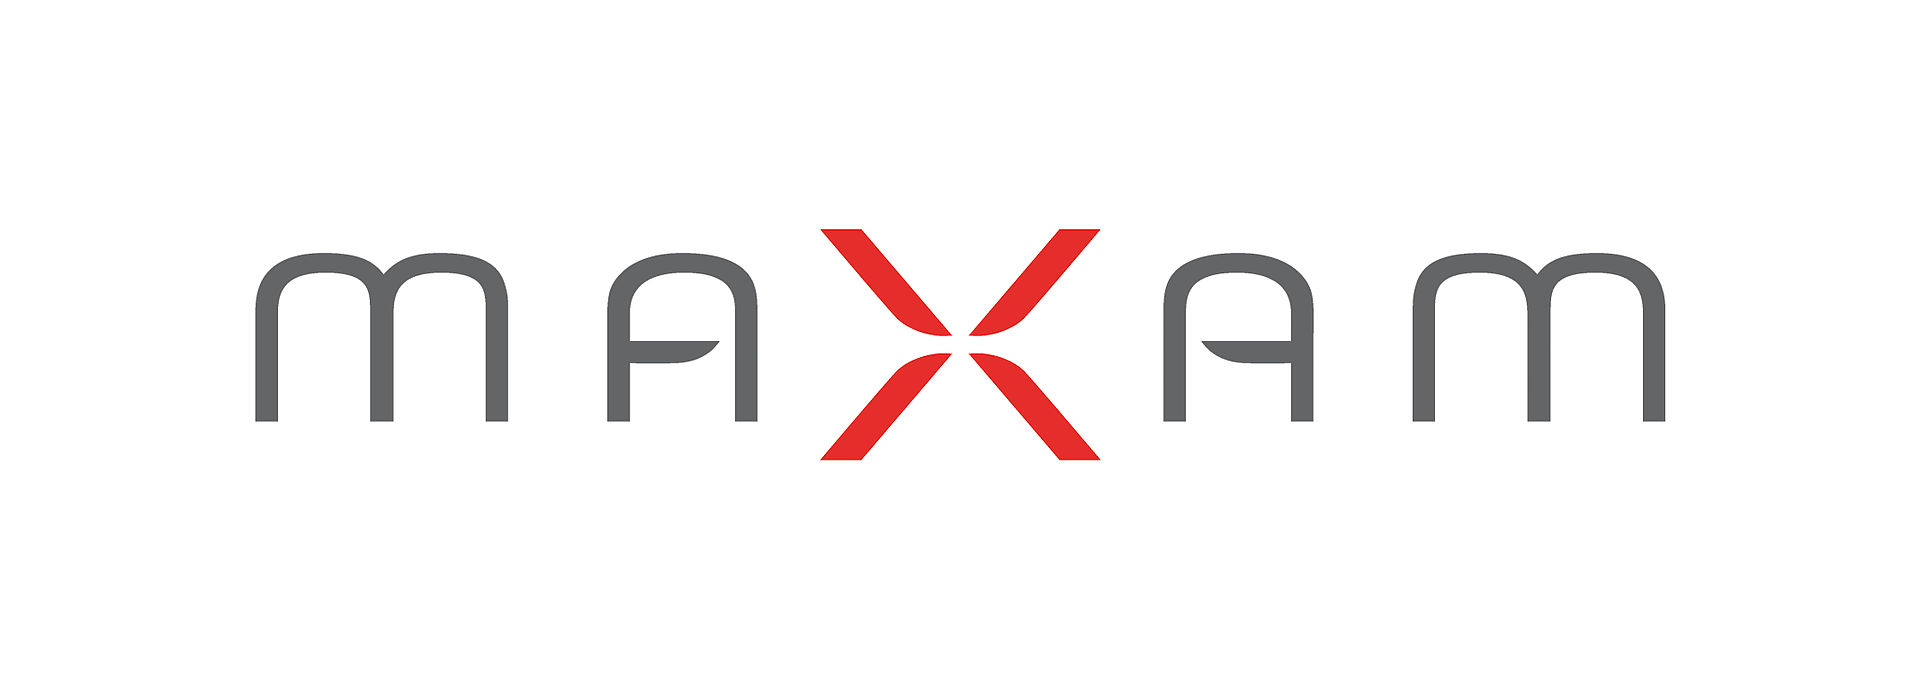 Maxam_logo